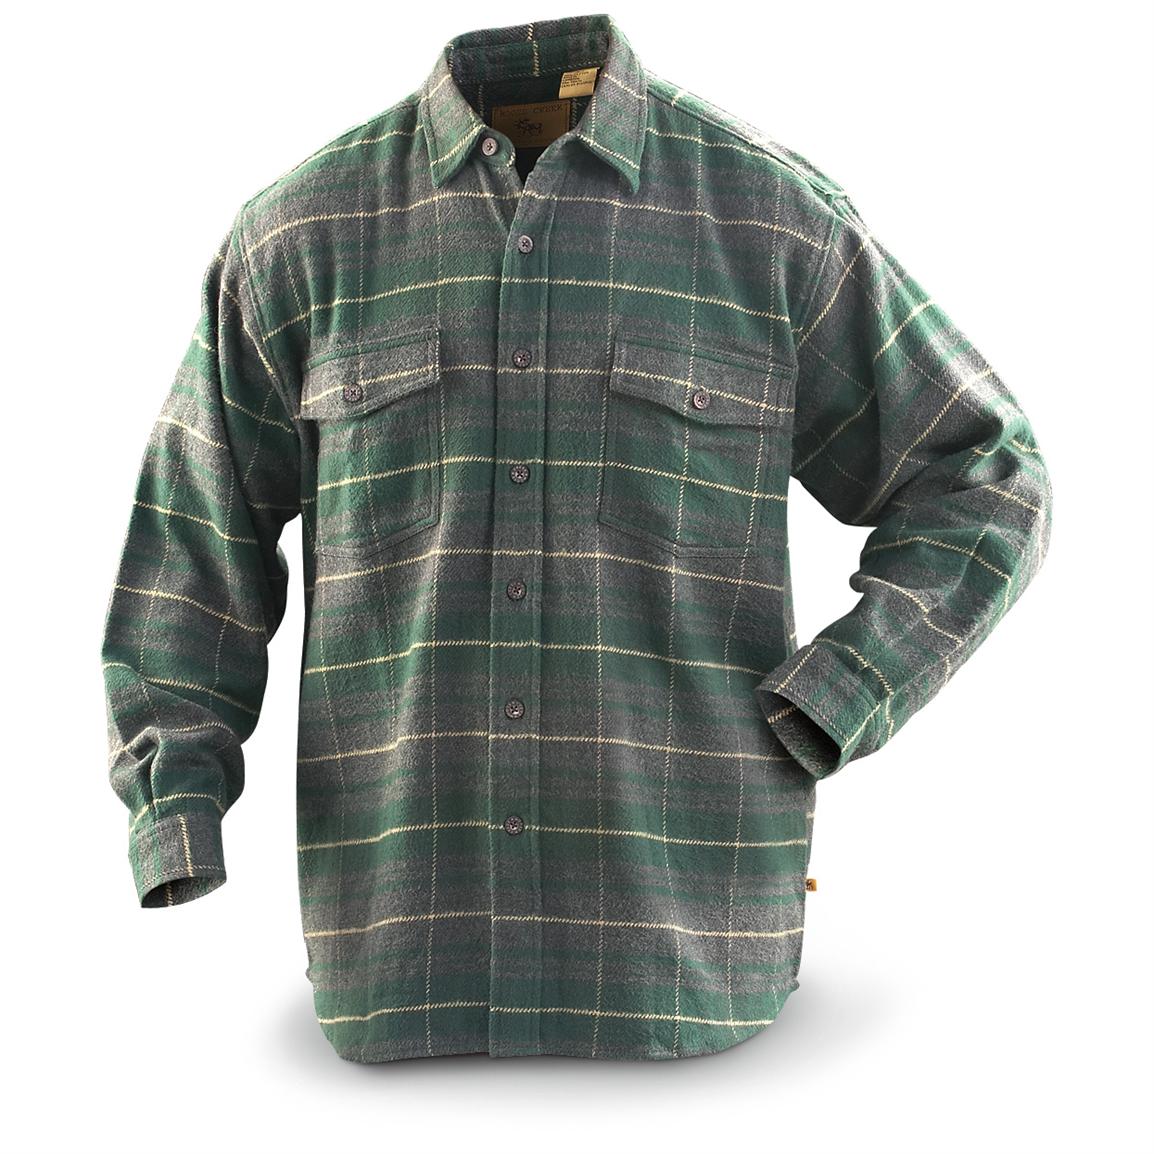 Moose Creek® Brawny Shirt - 138936, Shirts at Sportsman's Guide